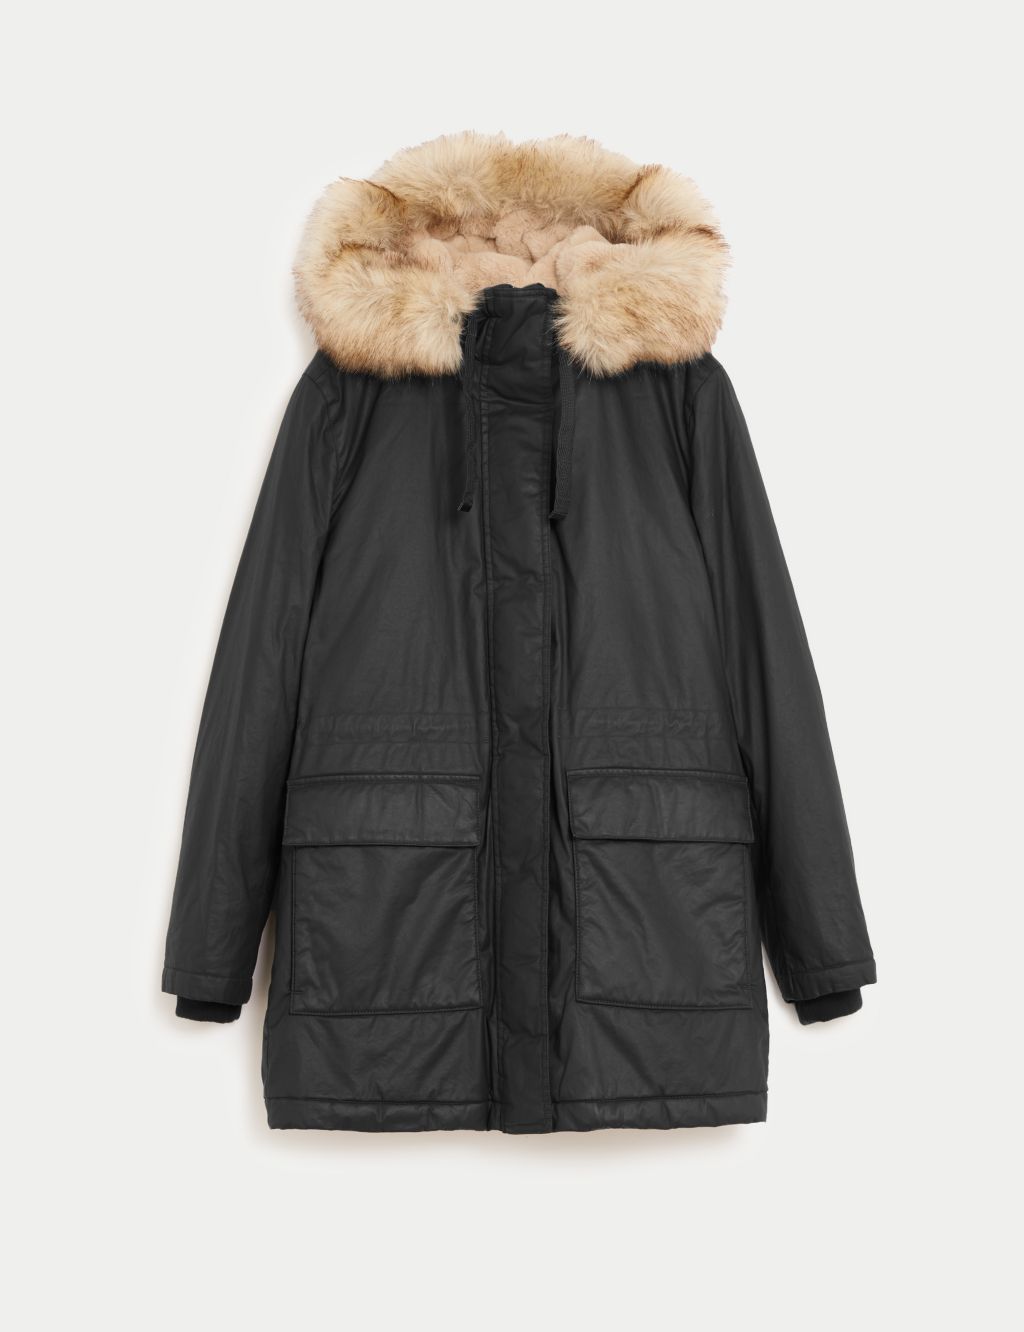 Stormwear™ Waxed Faux Fur Lined Hooded Parka image 2